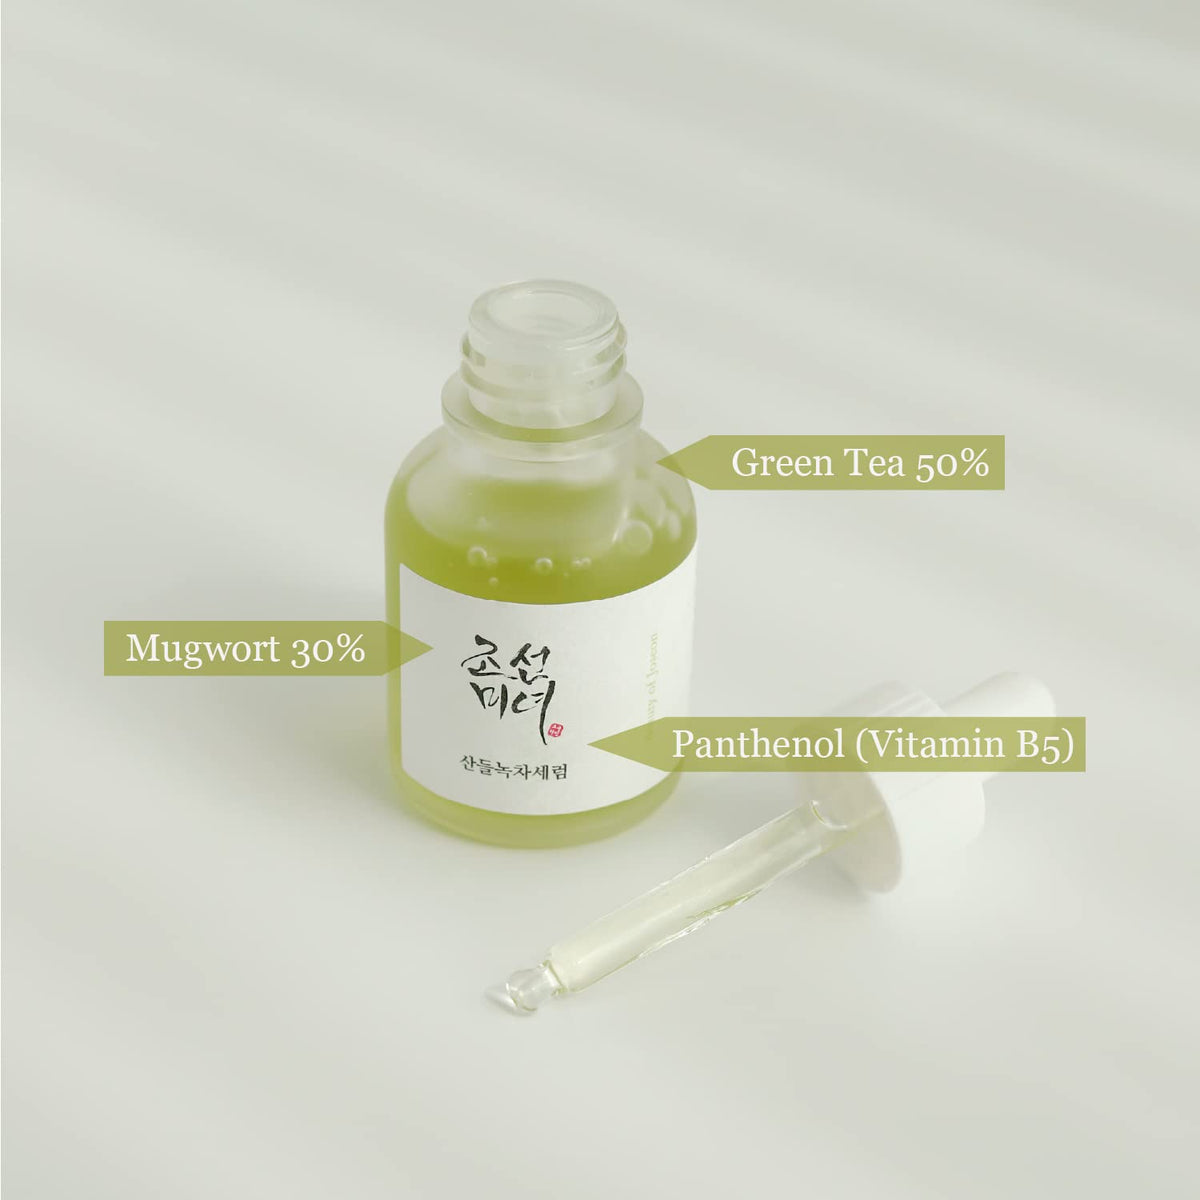 Beauty of Joseon - Calming serum : Green tea + Panthenol 30ml